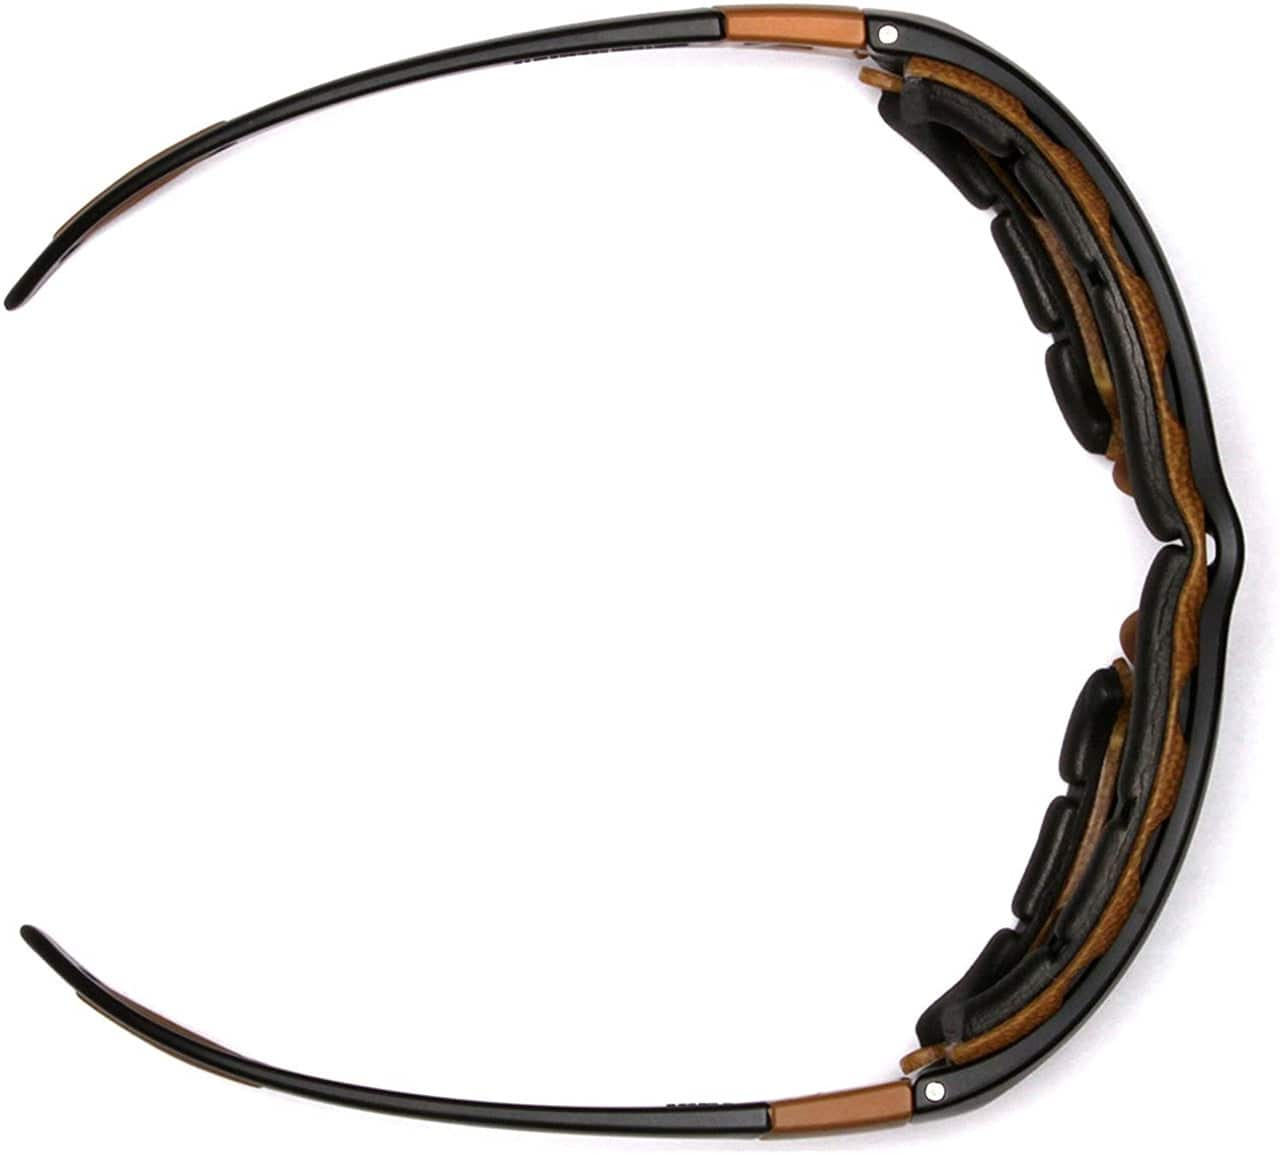 Carhartt Carthage Safety Glasses/Goggles Black Frame Sandstone Bronze Anti-Fog Lens CHB418DTP Top